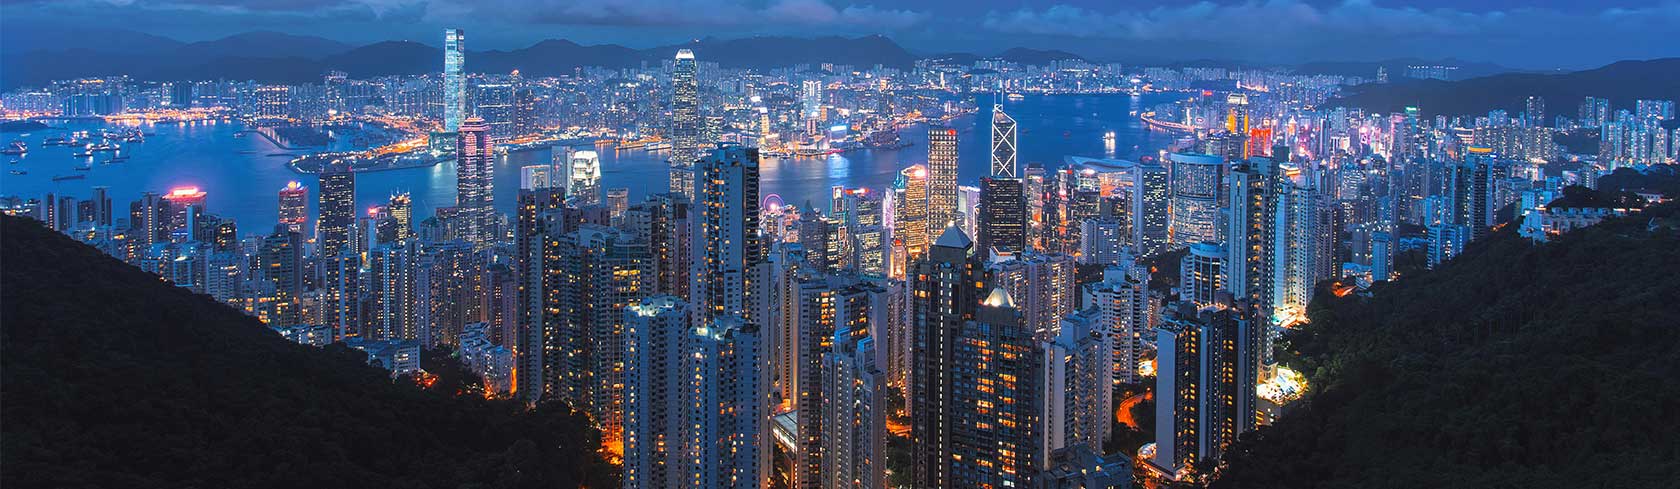 hongkong city